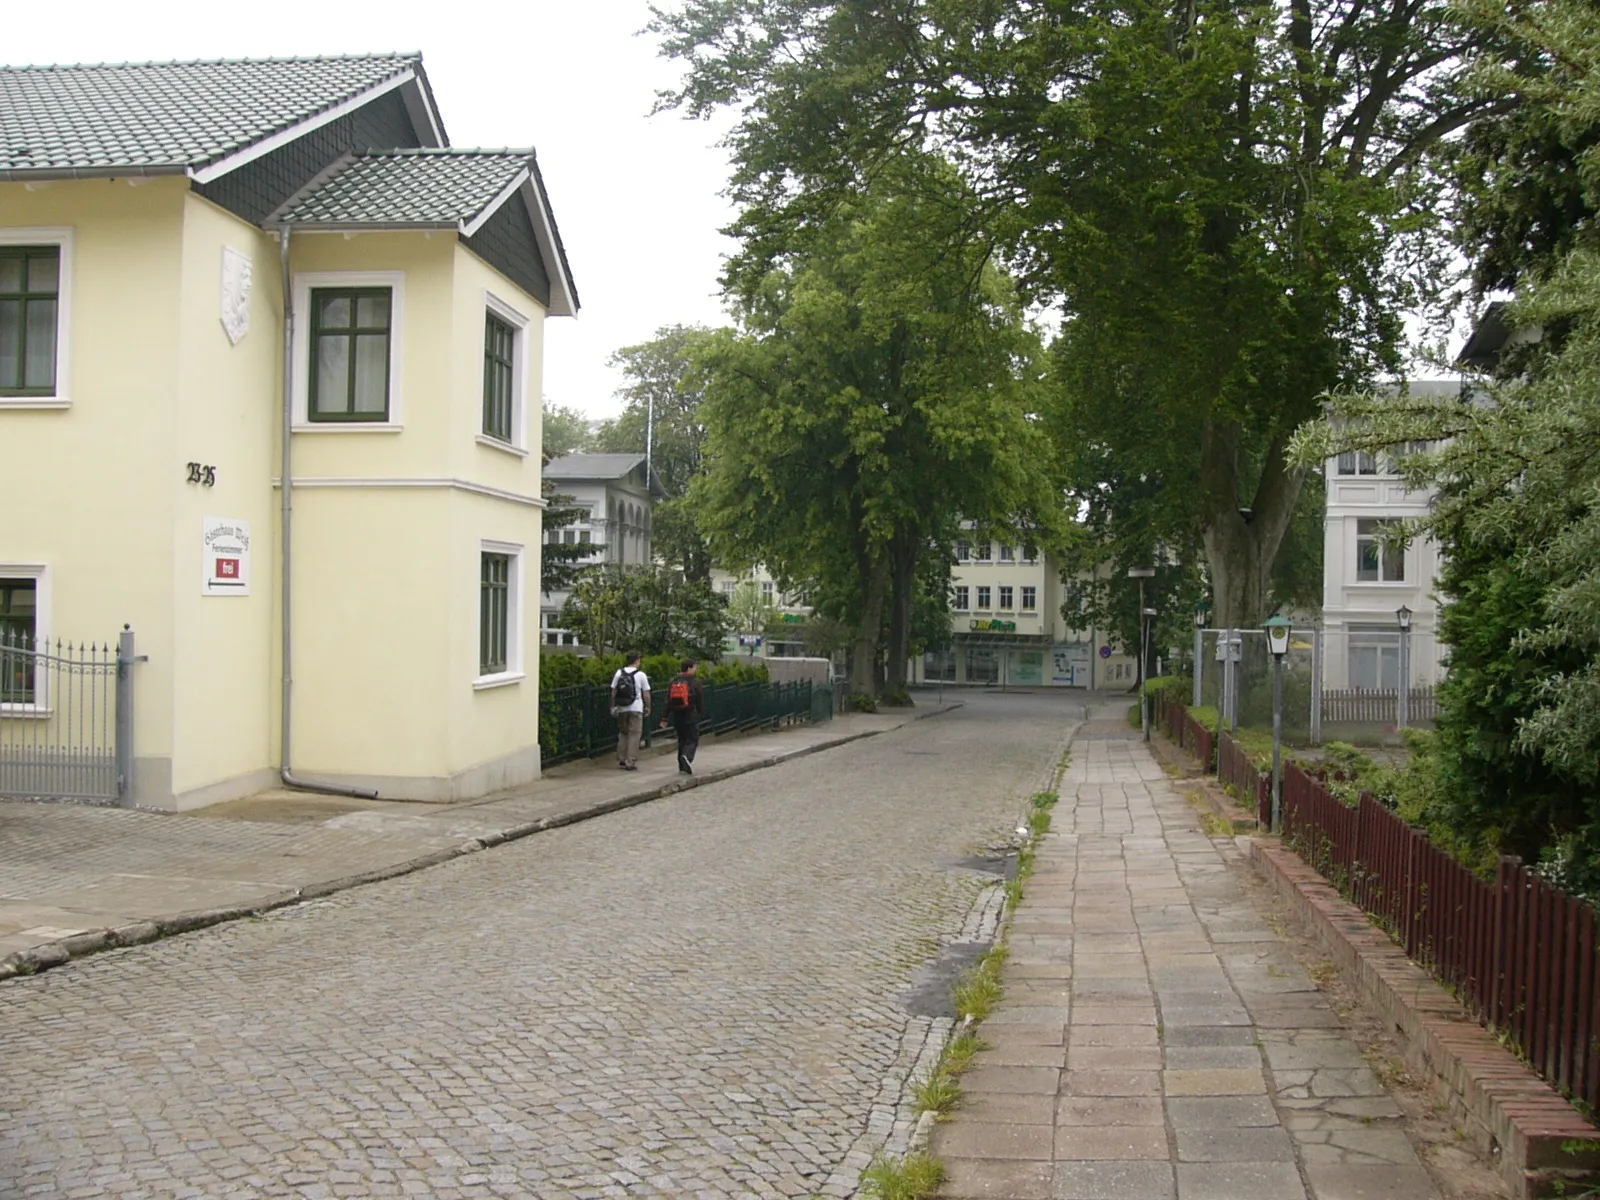 Photo showing: Zinnowitz, Germany